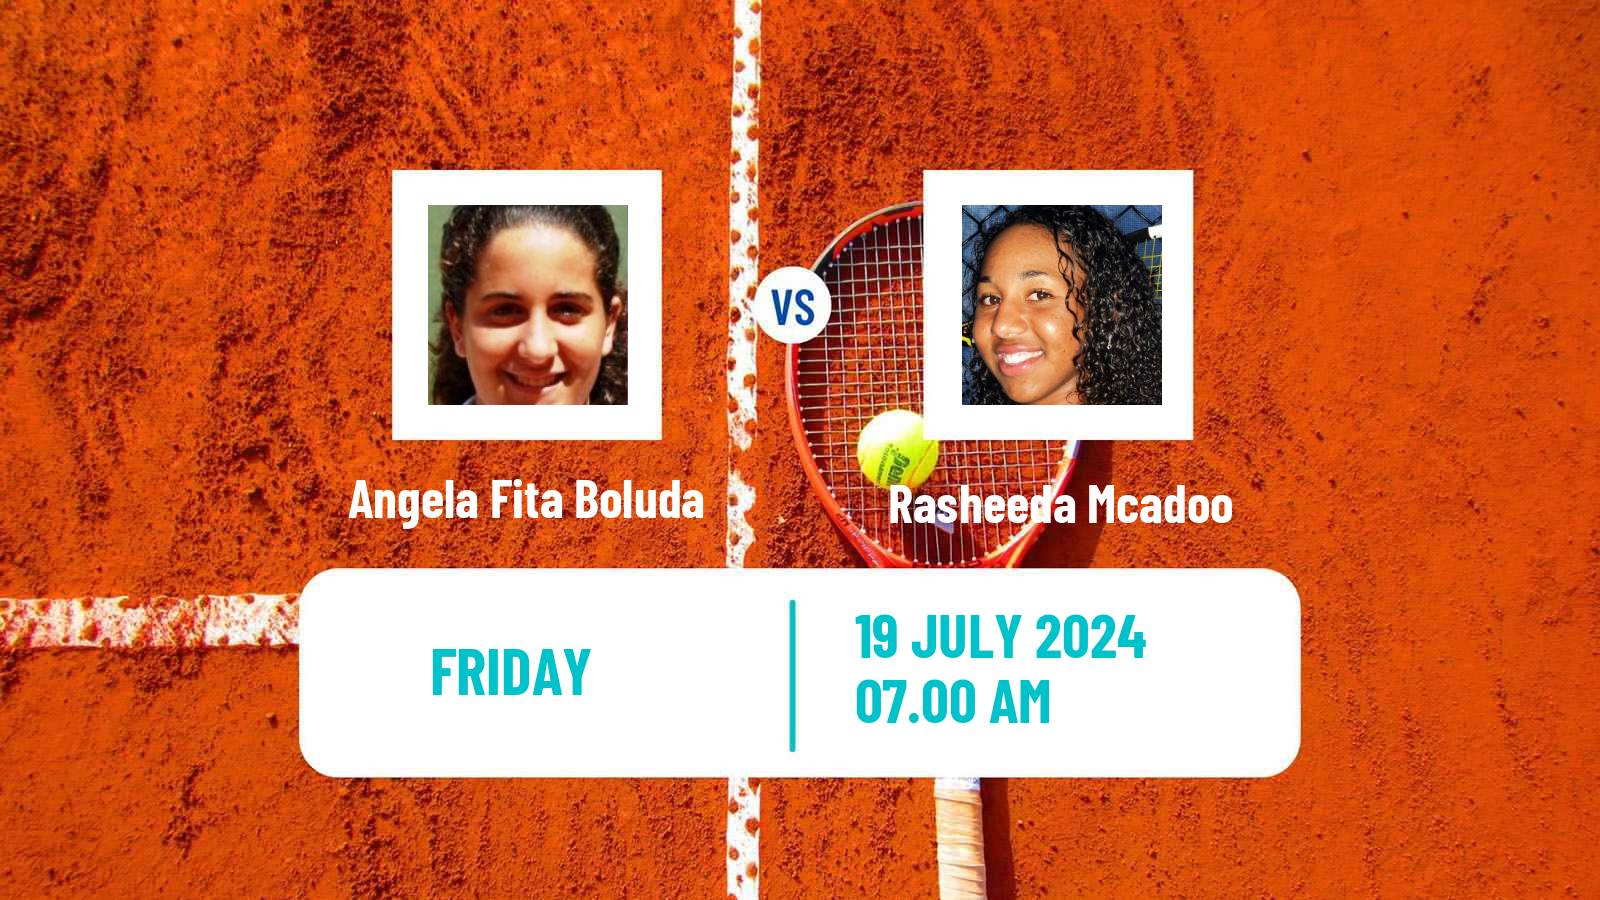 Tennis ITF W35 Darmstadt Women Angela Fita Boluda - Rasheeda Mcadoo